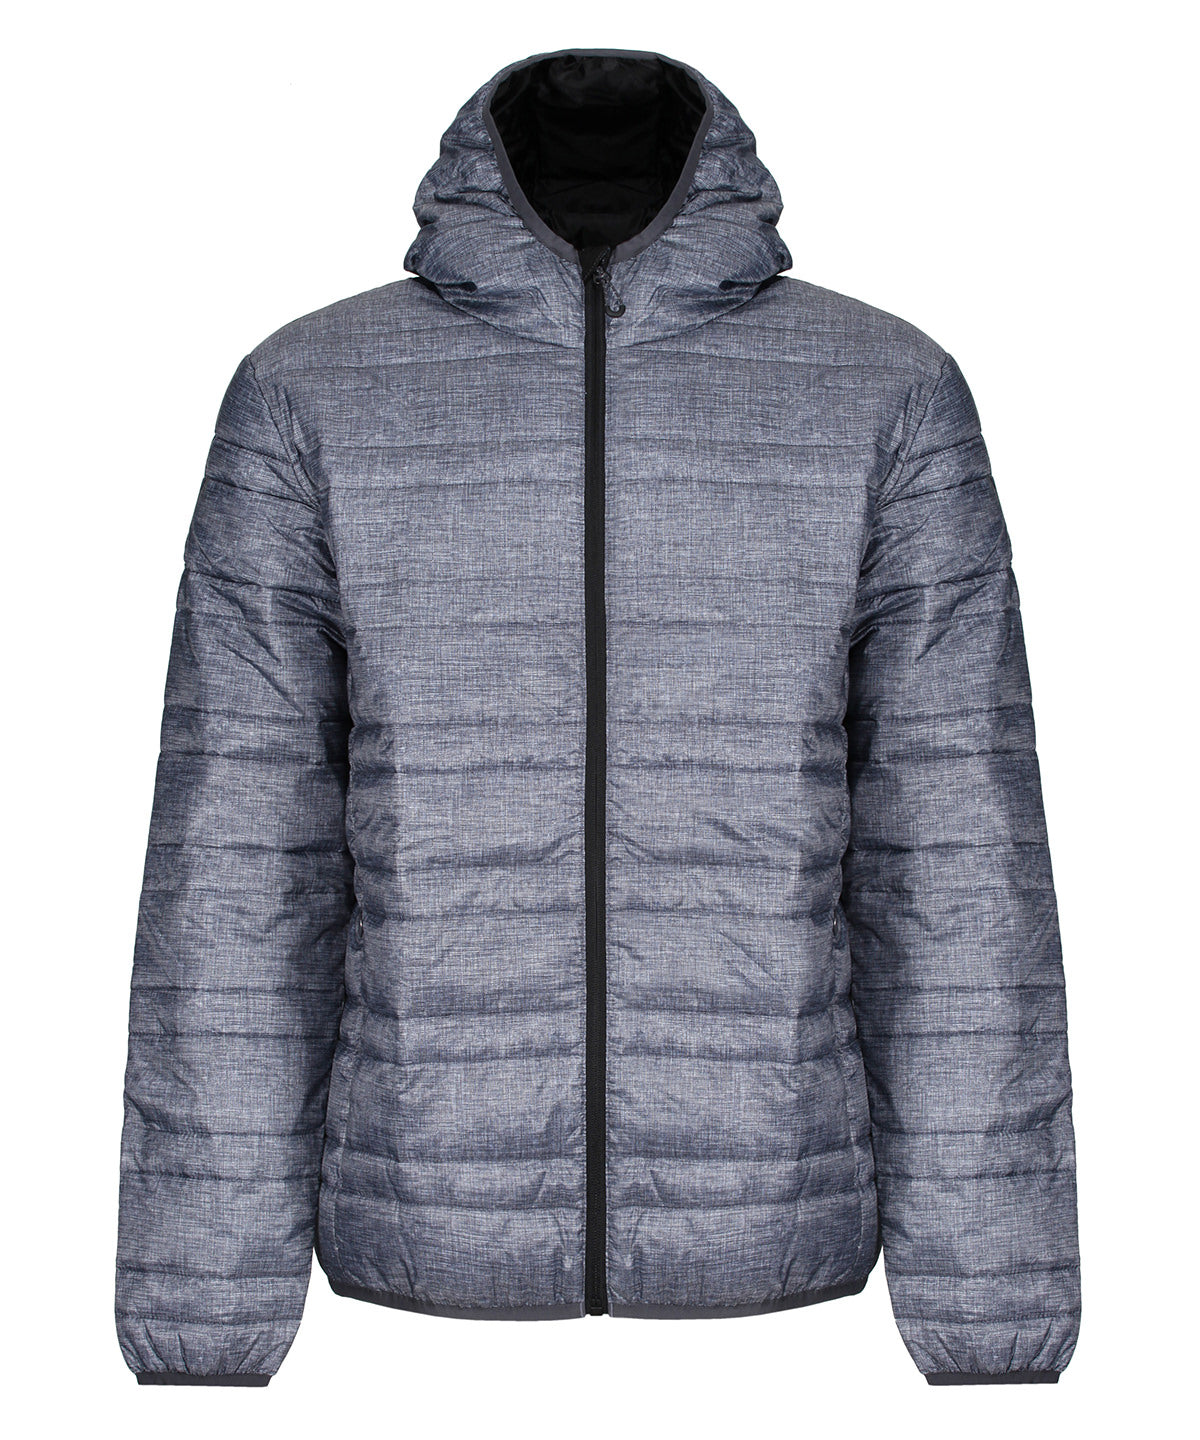 Hooded firedown packaway baffle jacket